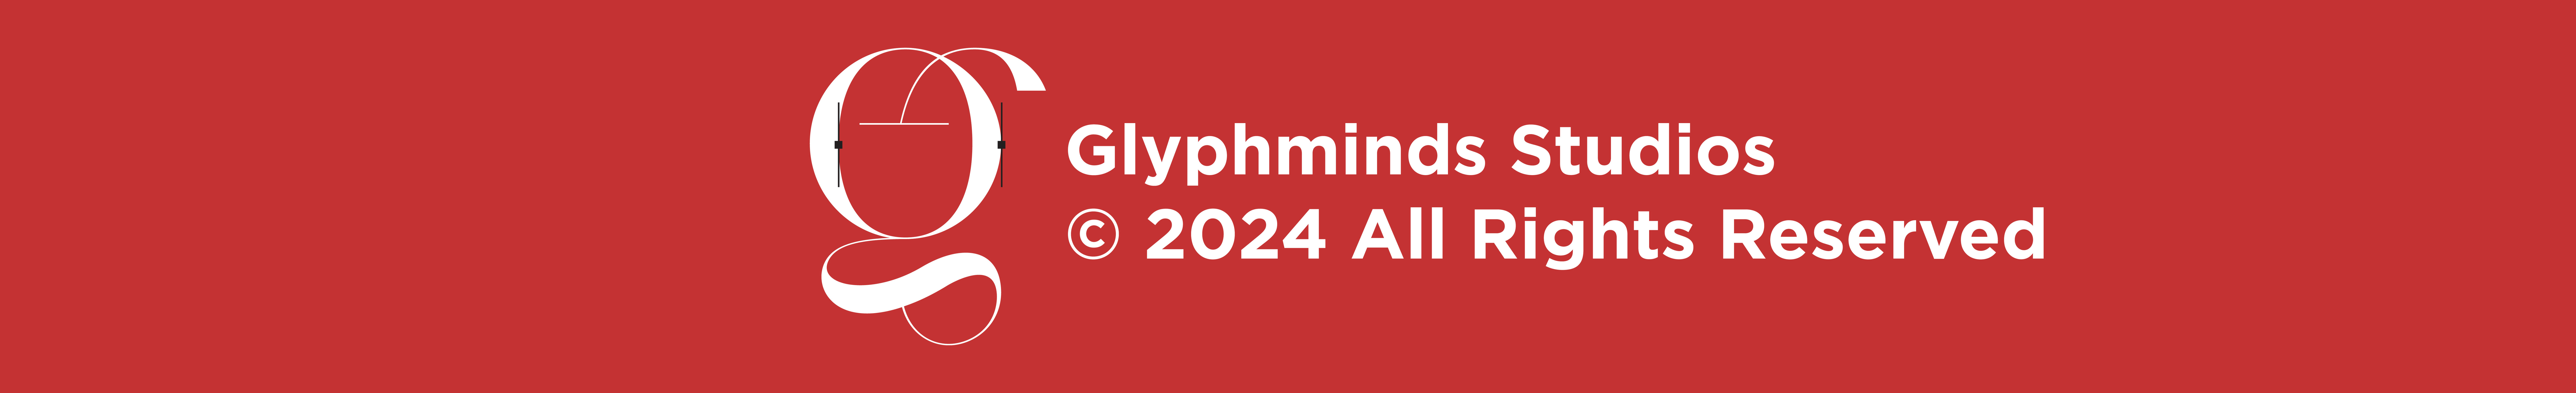 Glyphminds Studio's profile banner